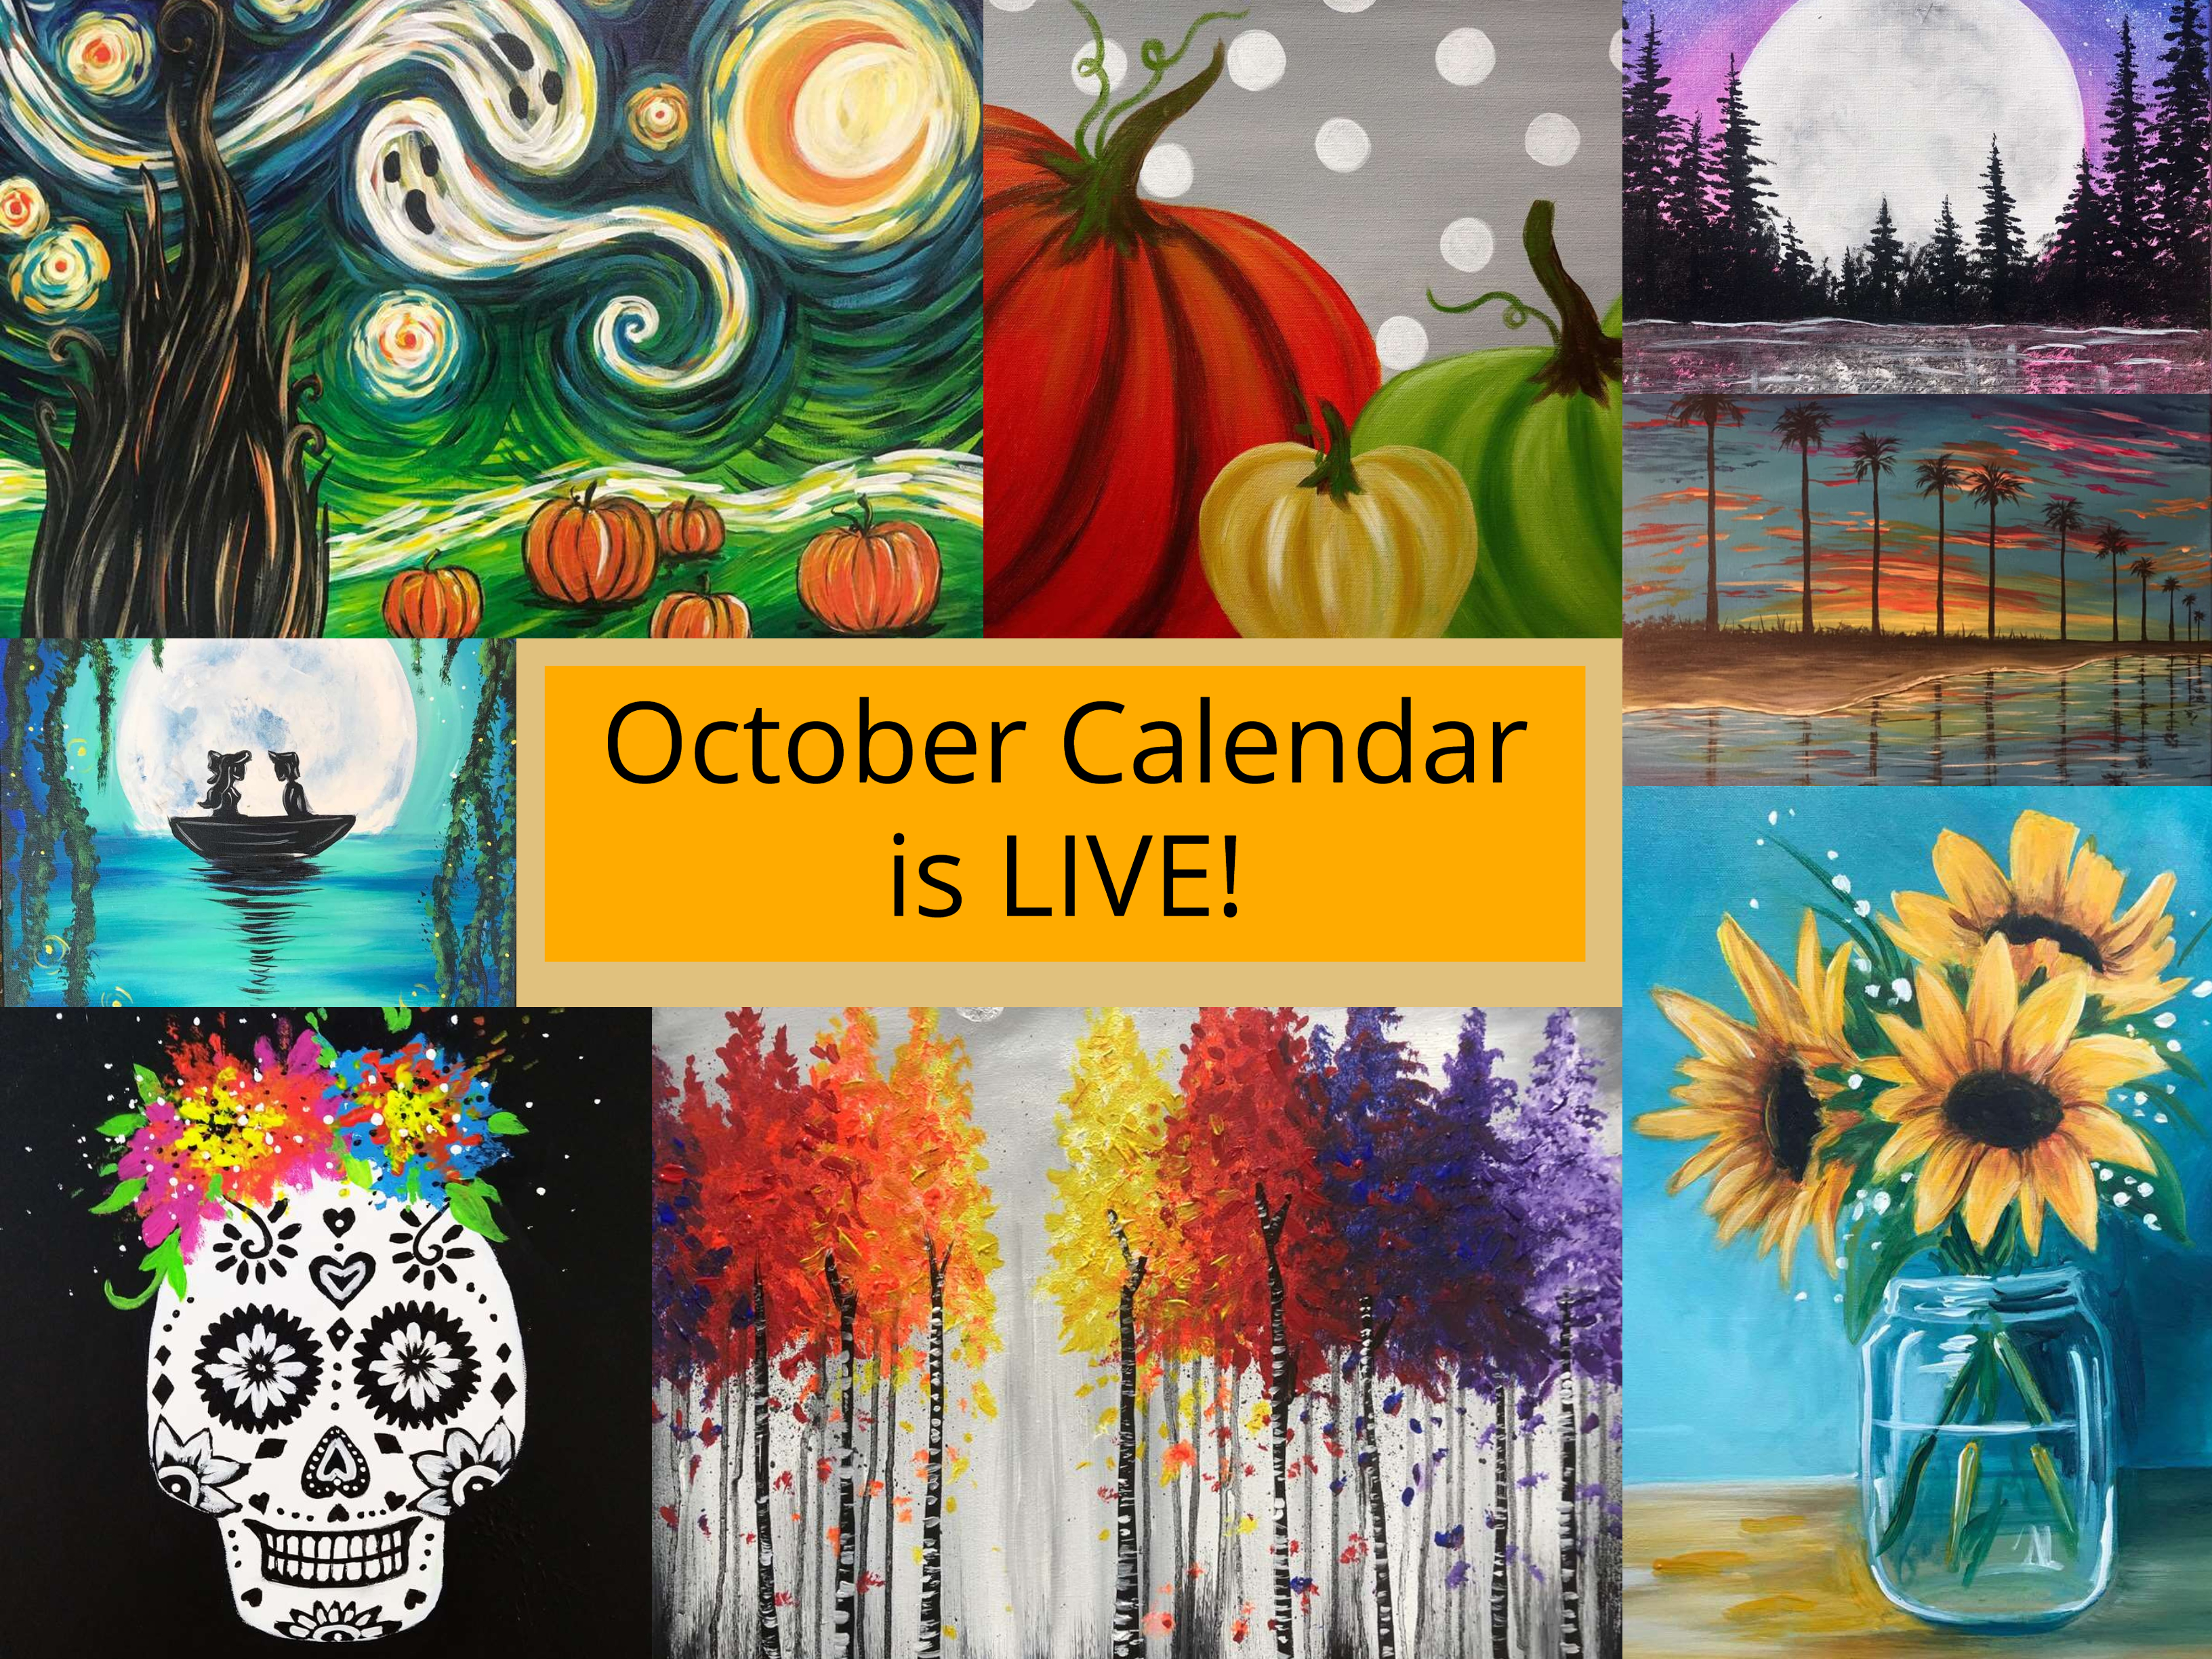 October Calendar is LIVE!